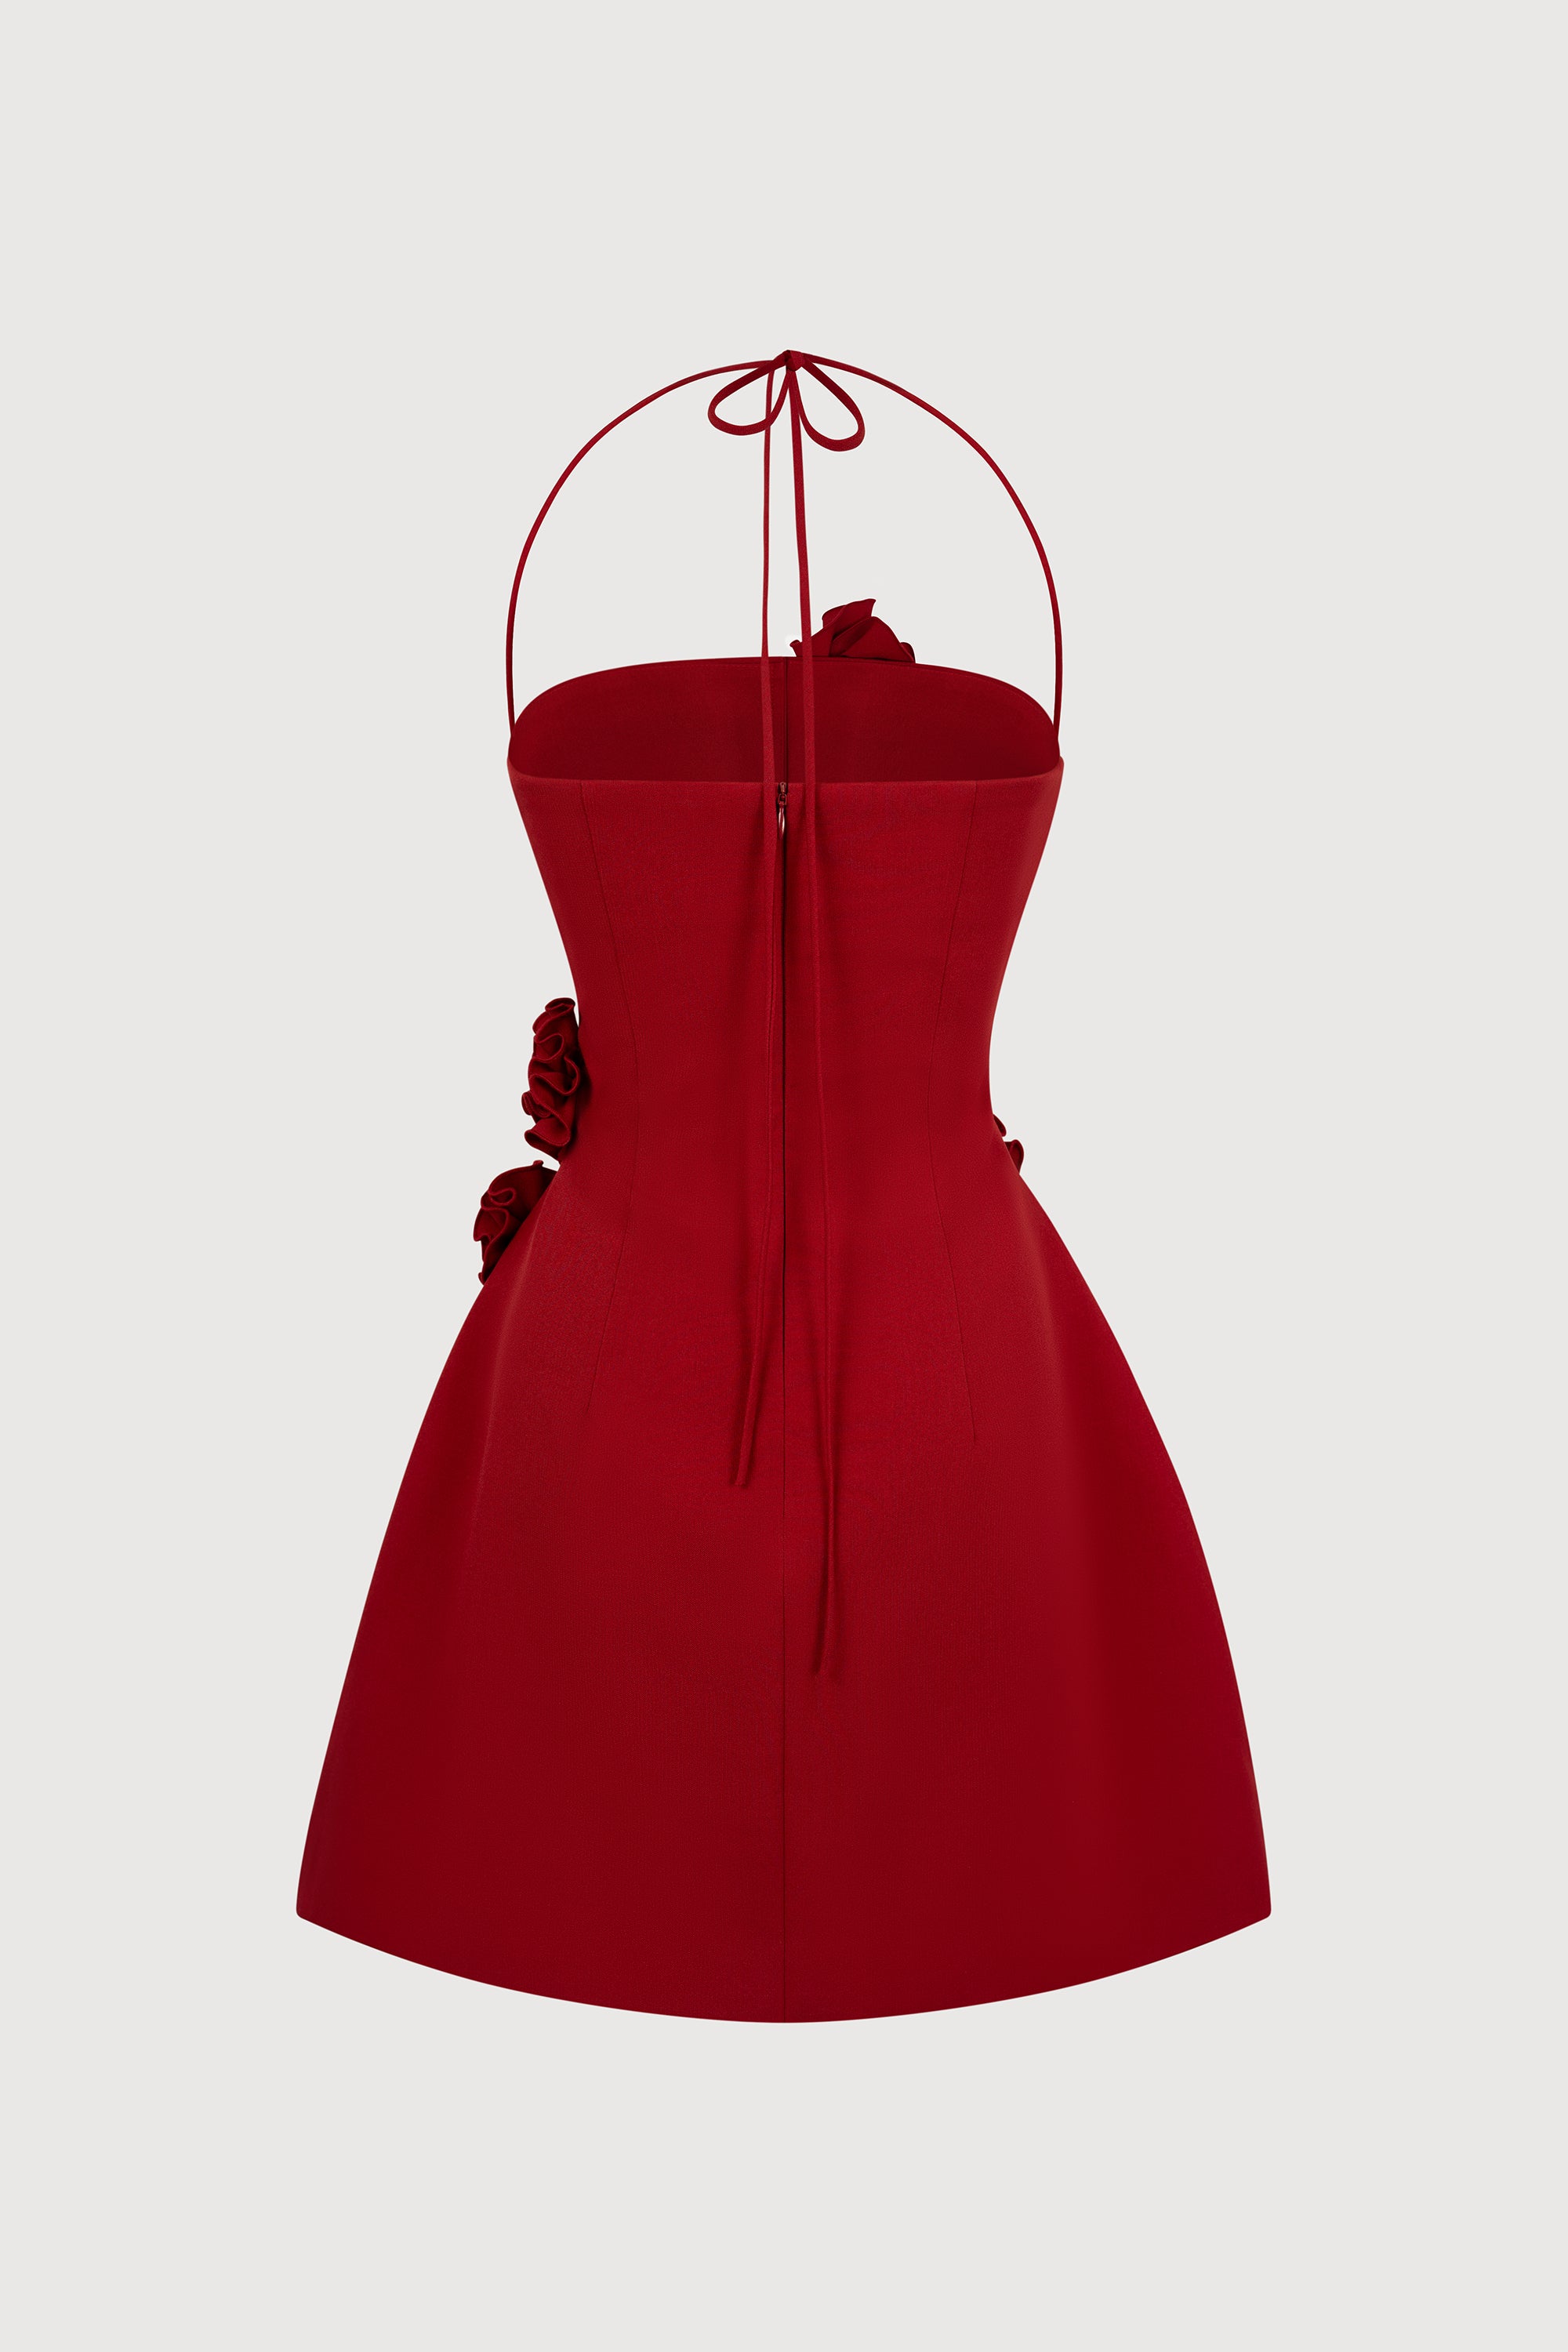 Bobby Red Dress